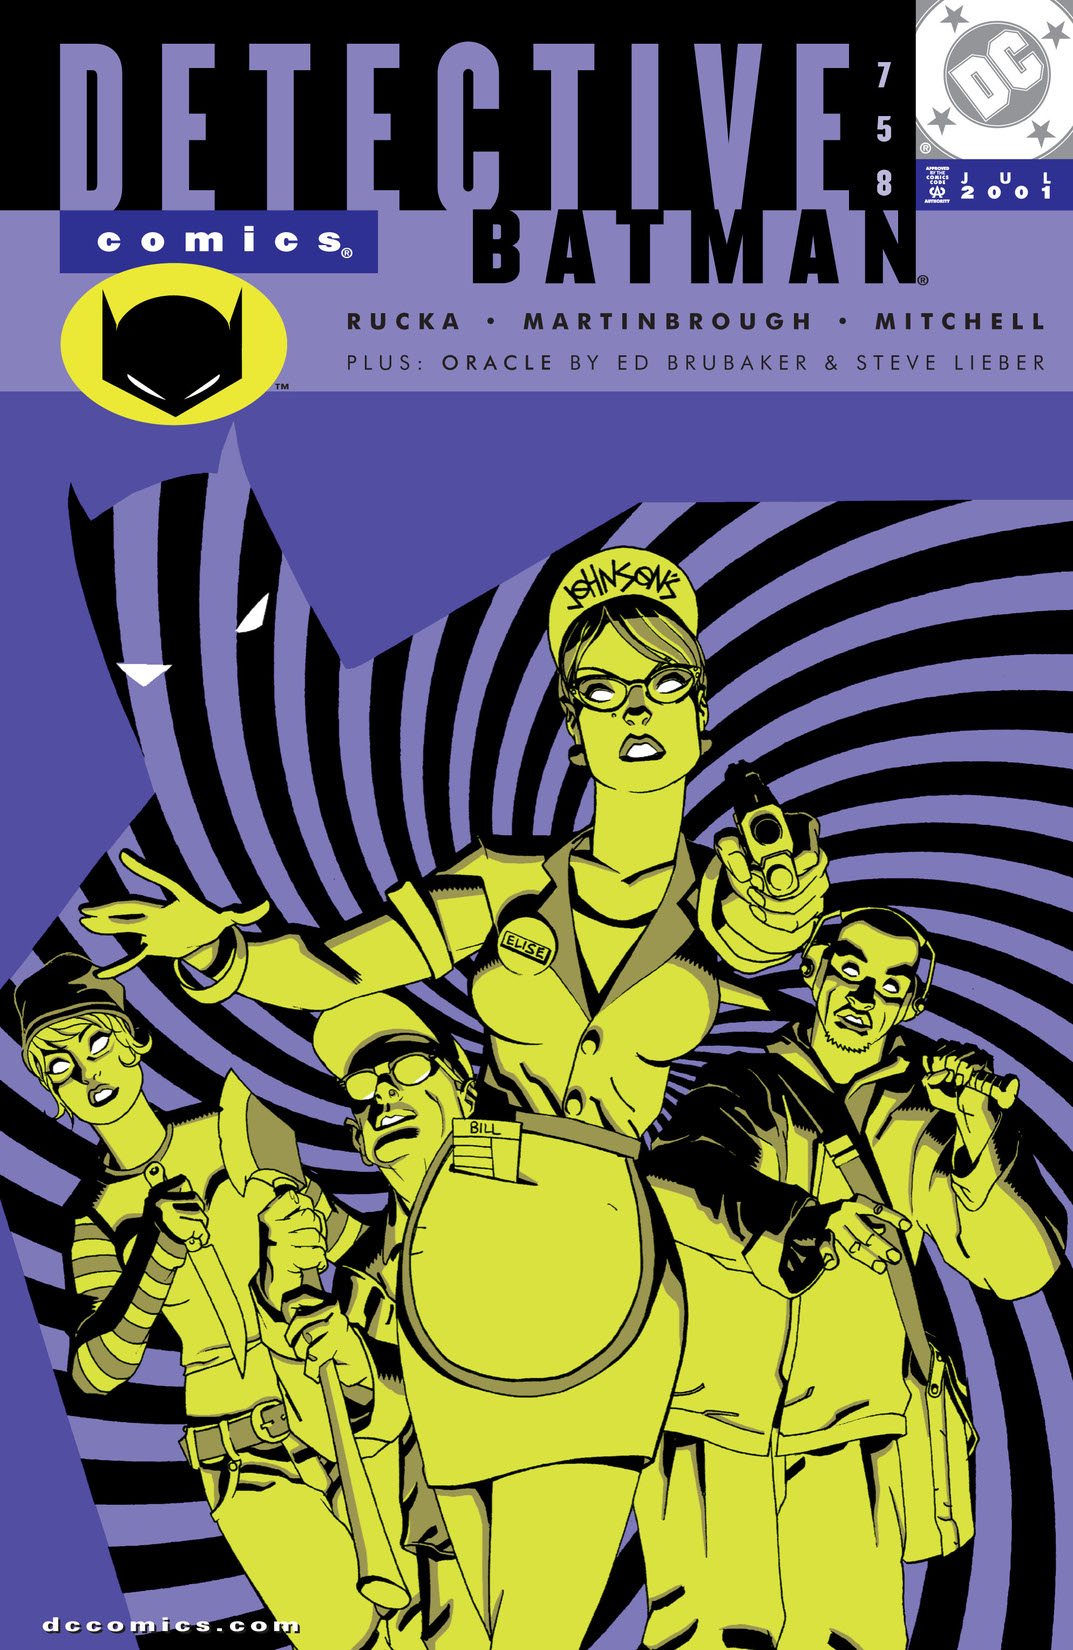 Detective Comics (1937-) #758 preview images